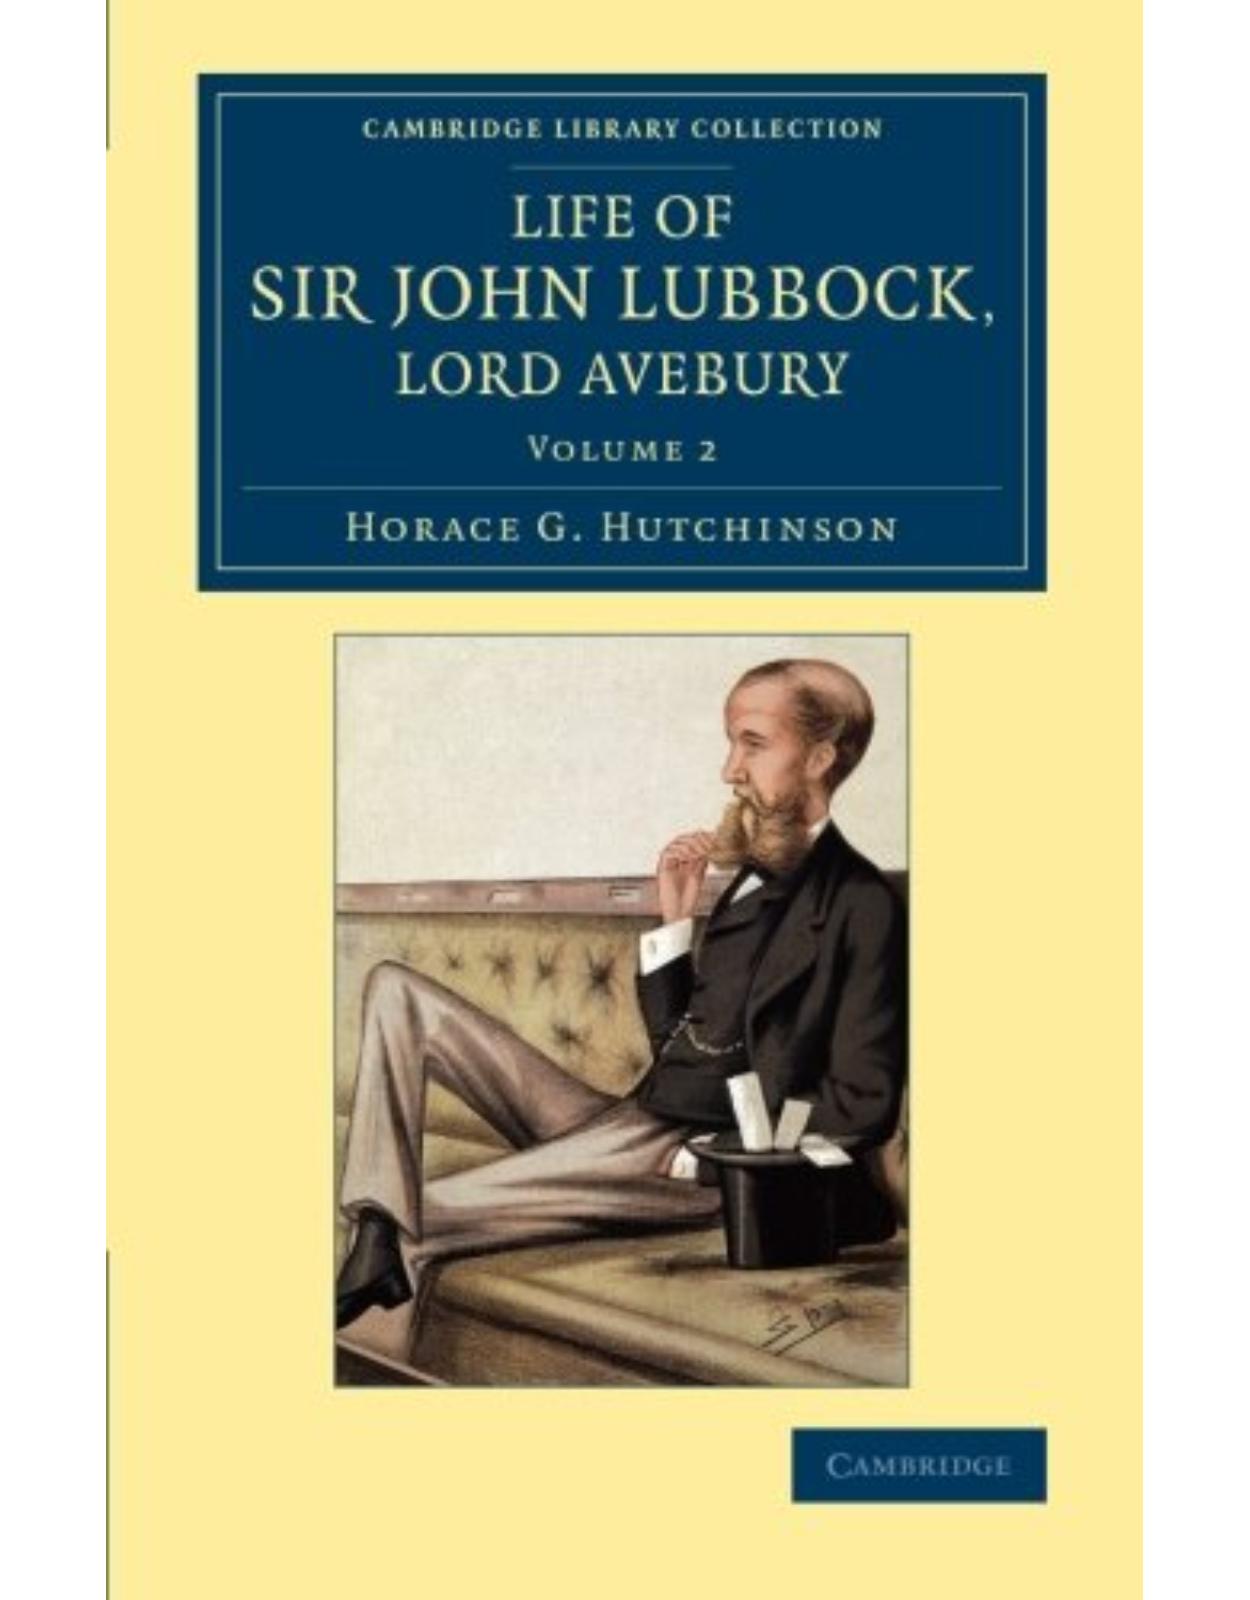 Life of Sir John Lubbock, Lord Avebury: Volume 2 (Cambridge Library Collection - British and Irish History, 19th Century)